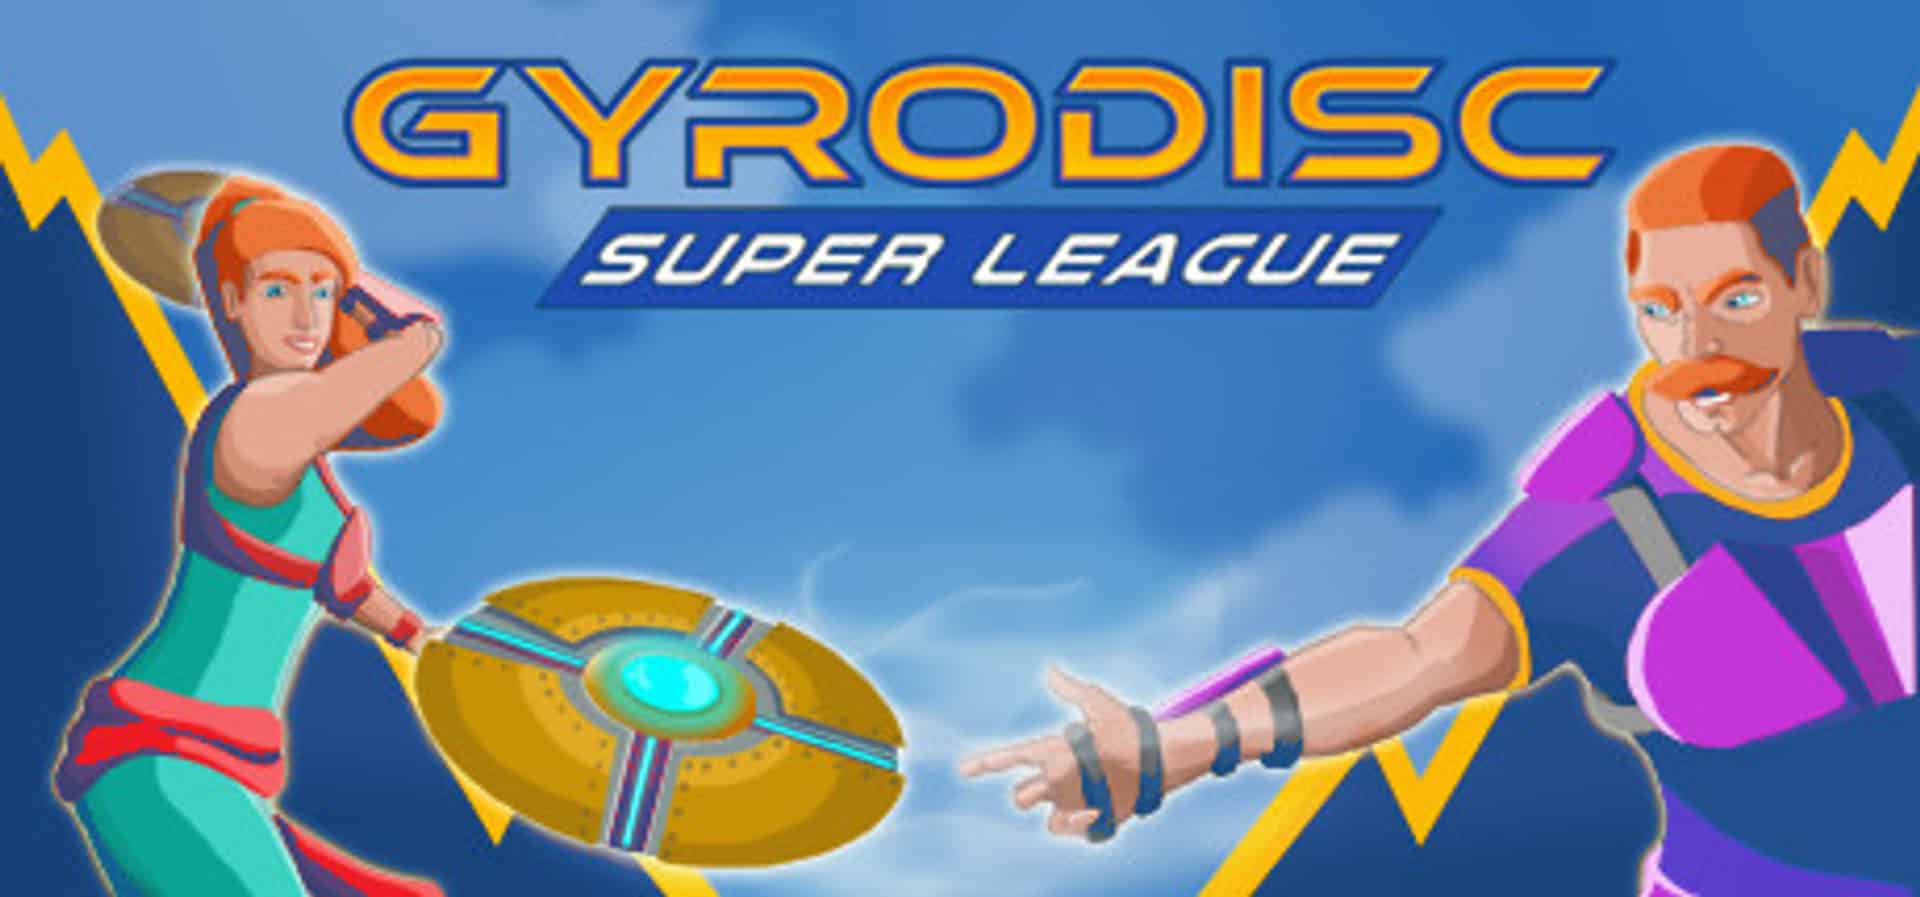 Gyrodisc Super League